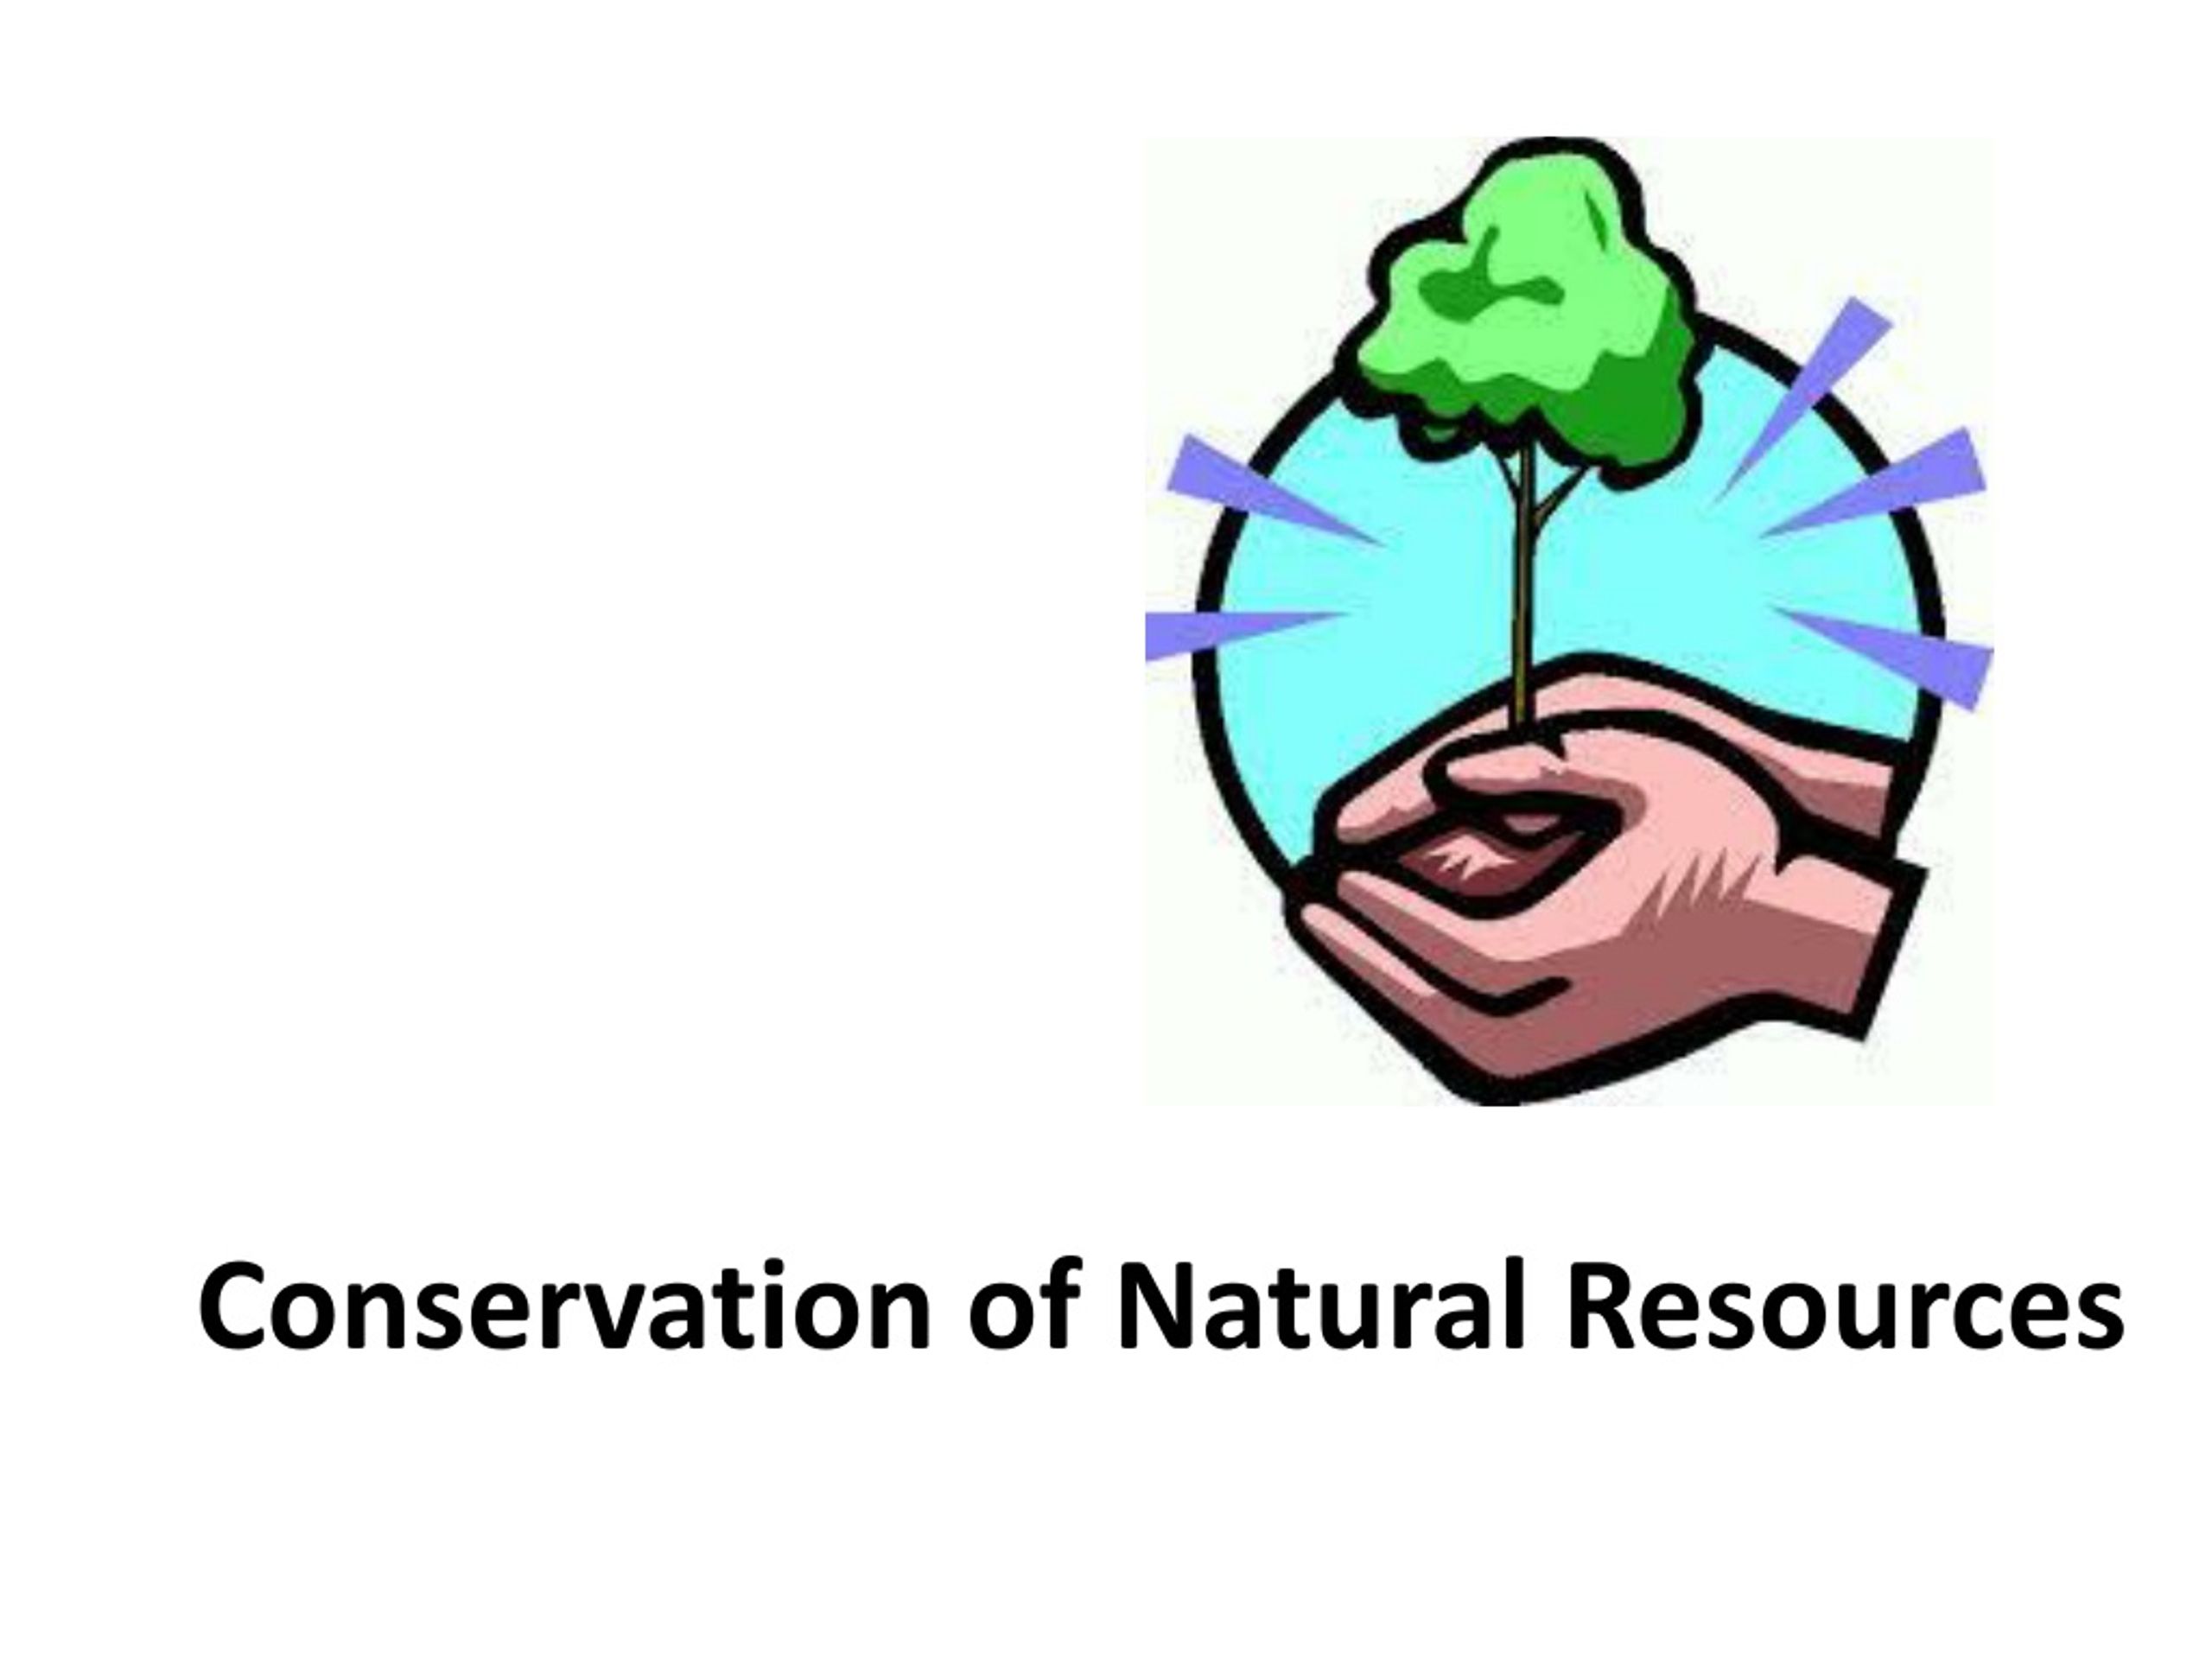 Natural conservation